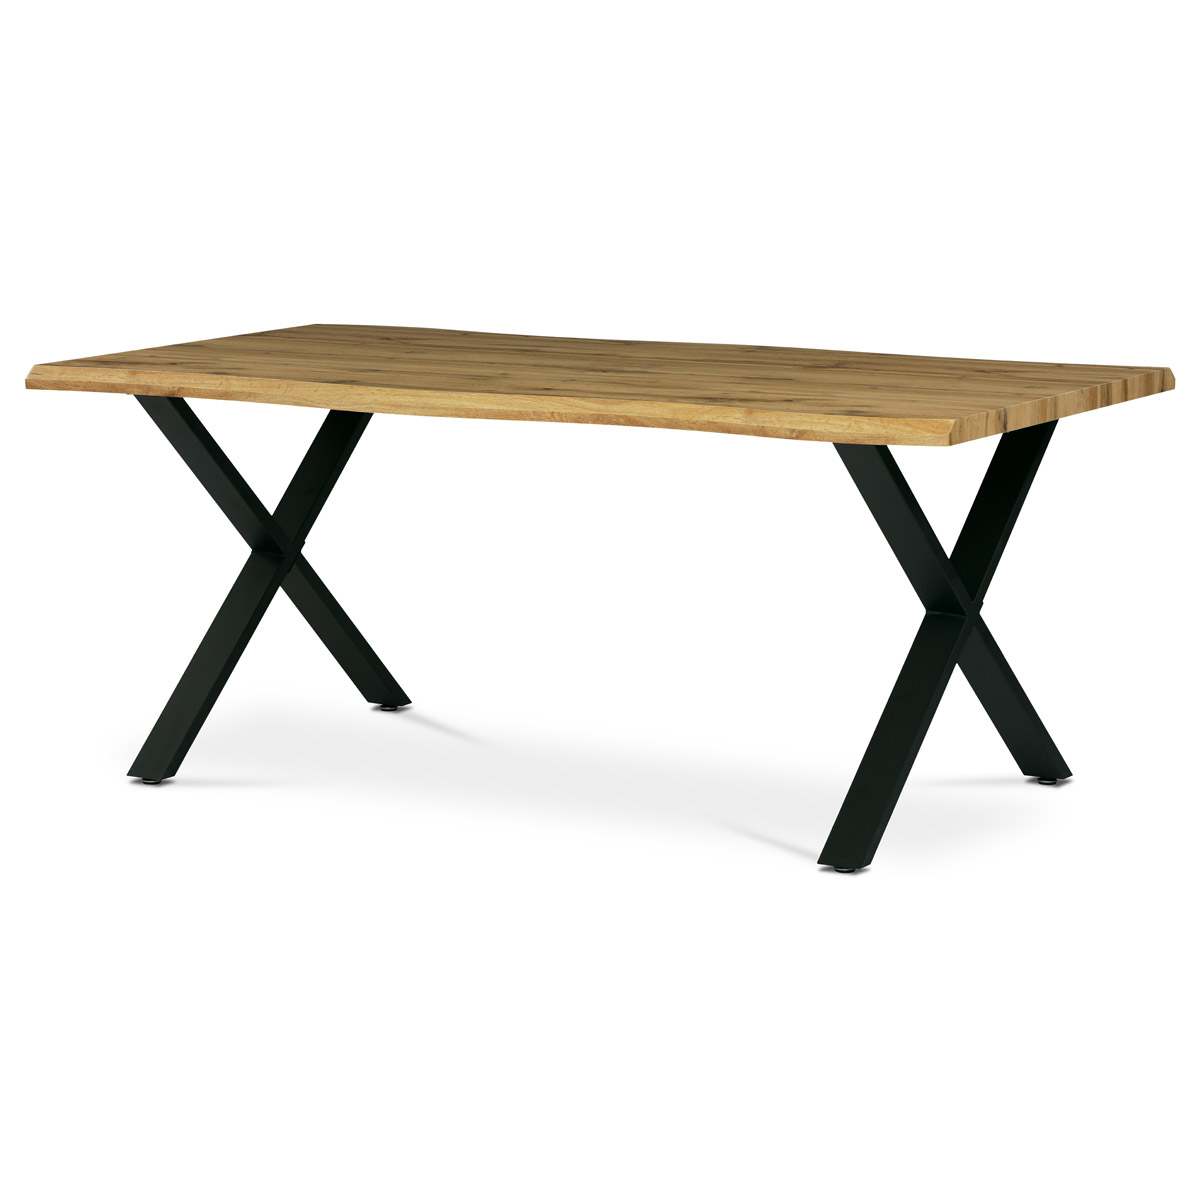 Jídelní stůl, 180x100 cm, MDF deska, dekor divoký dub, kov, černý lak